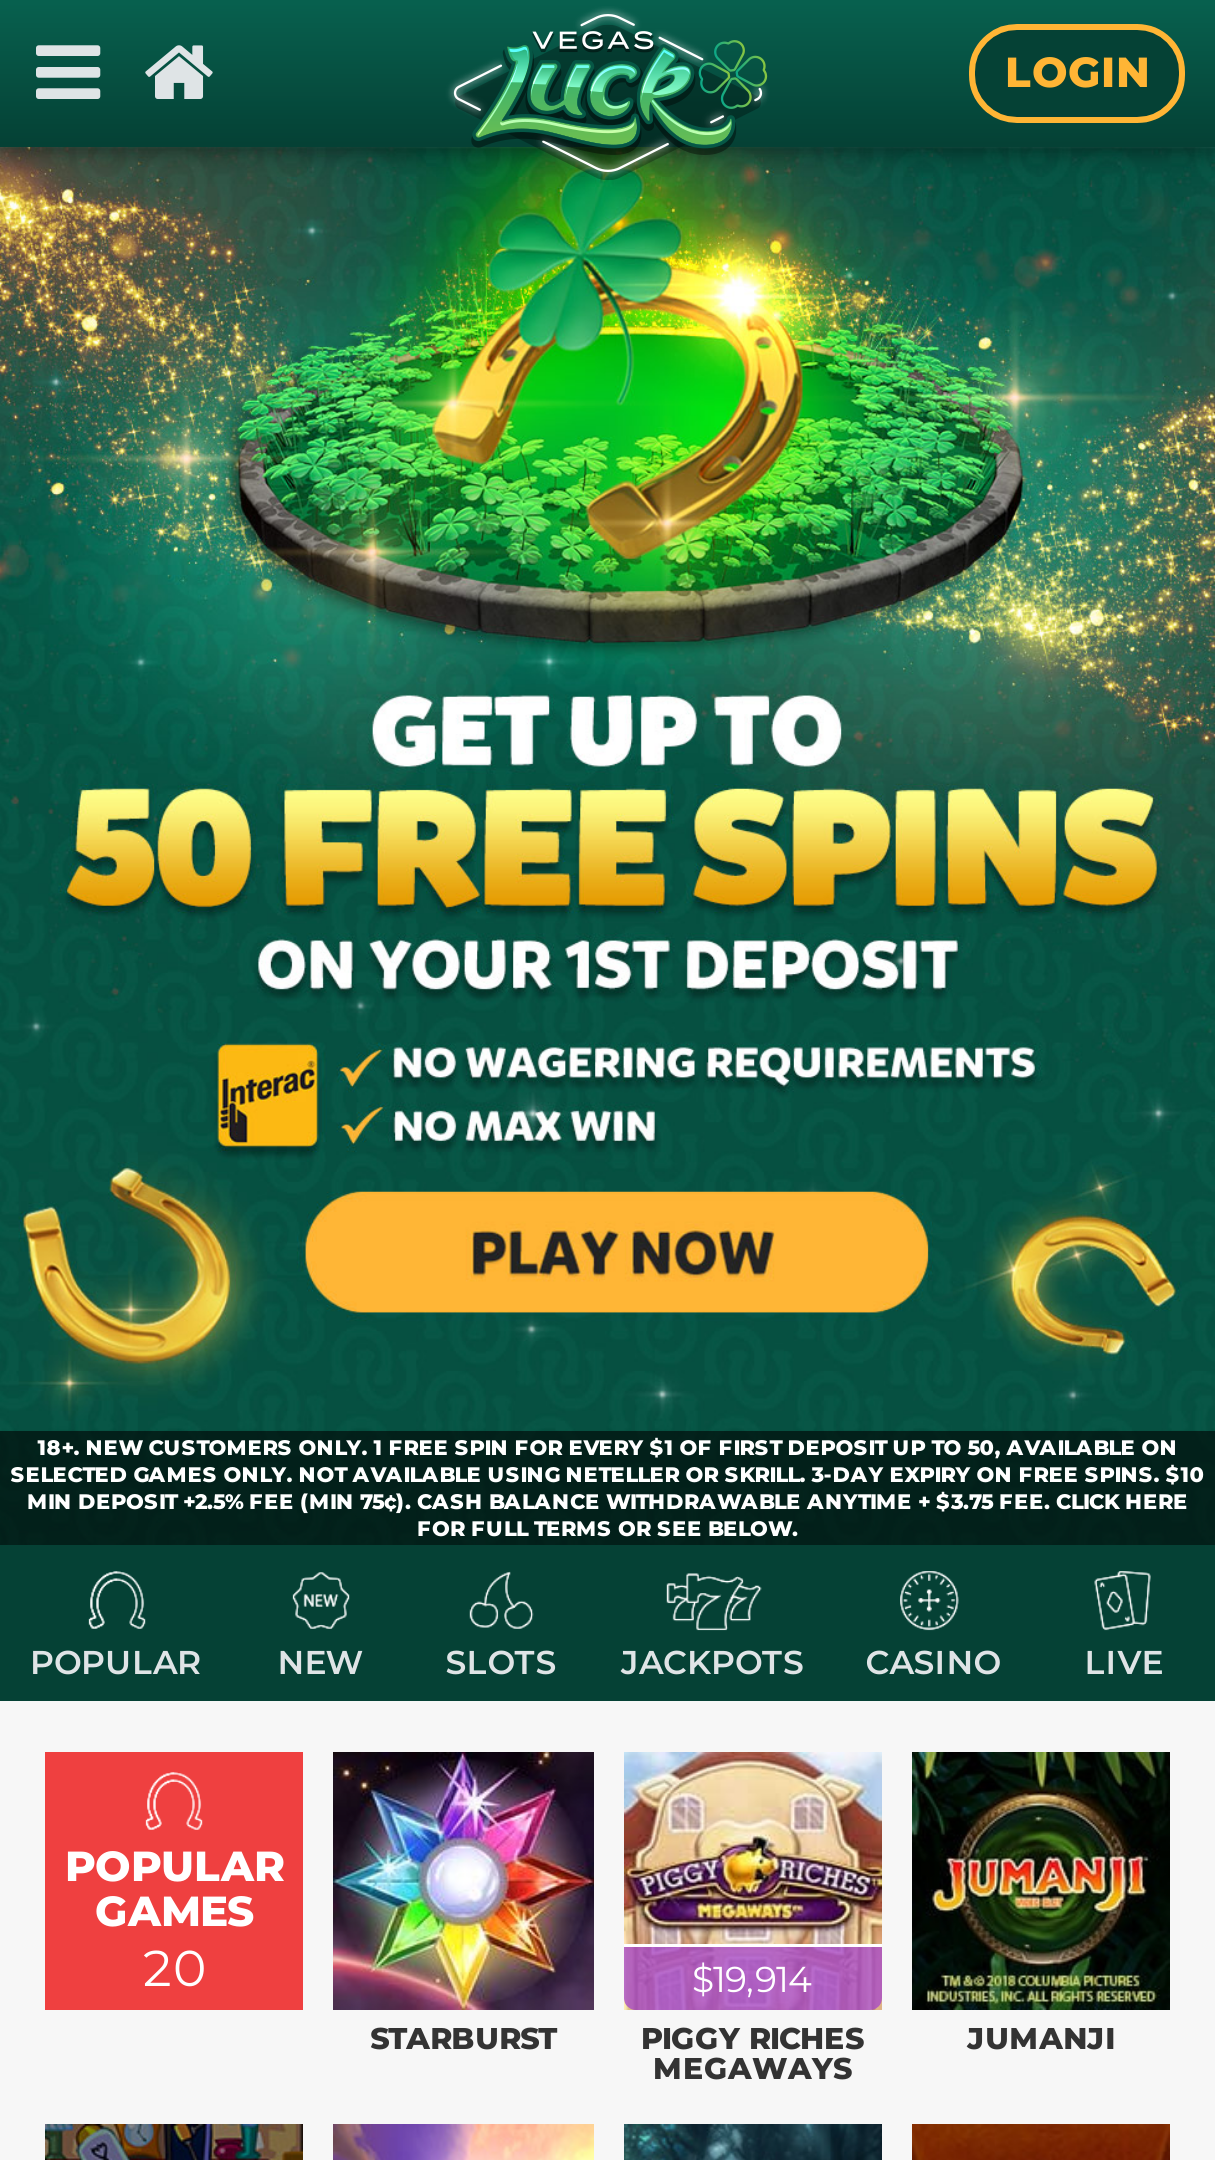 7bit casino no deposit codes 2019